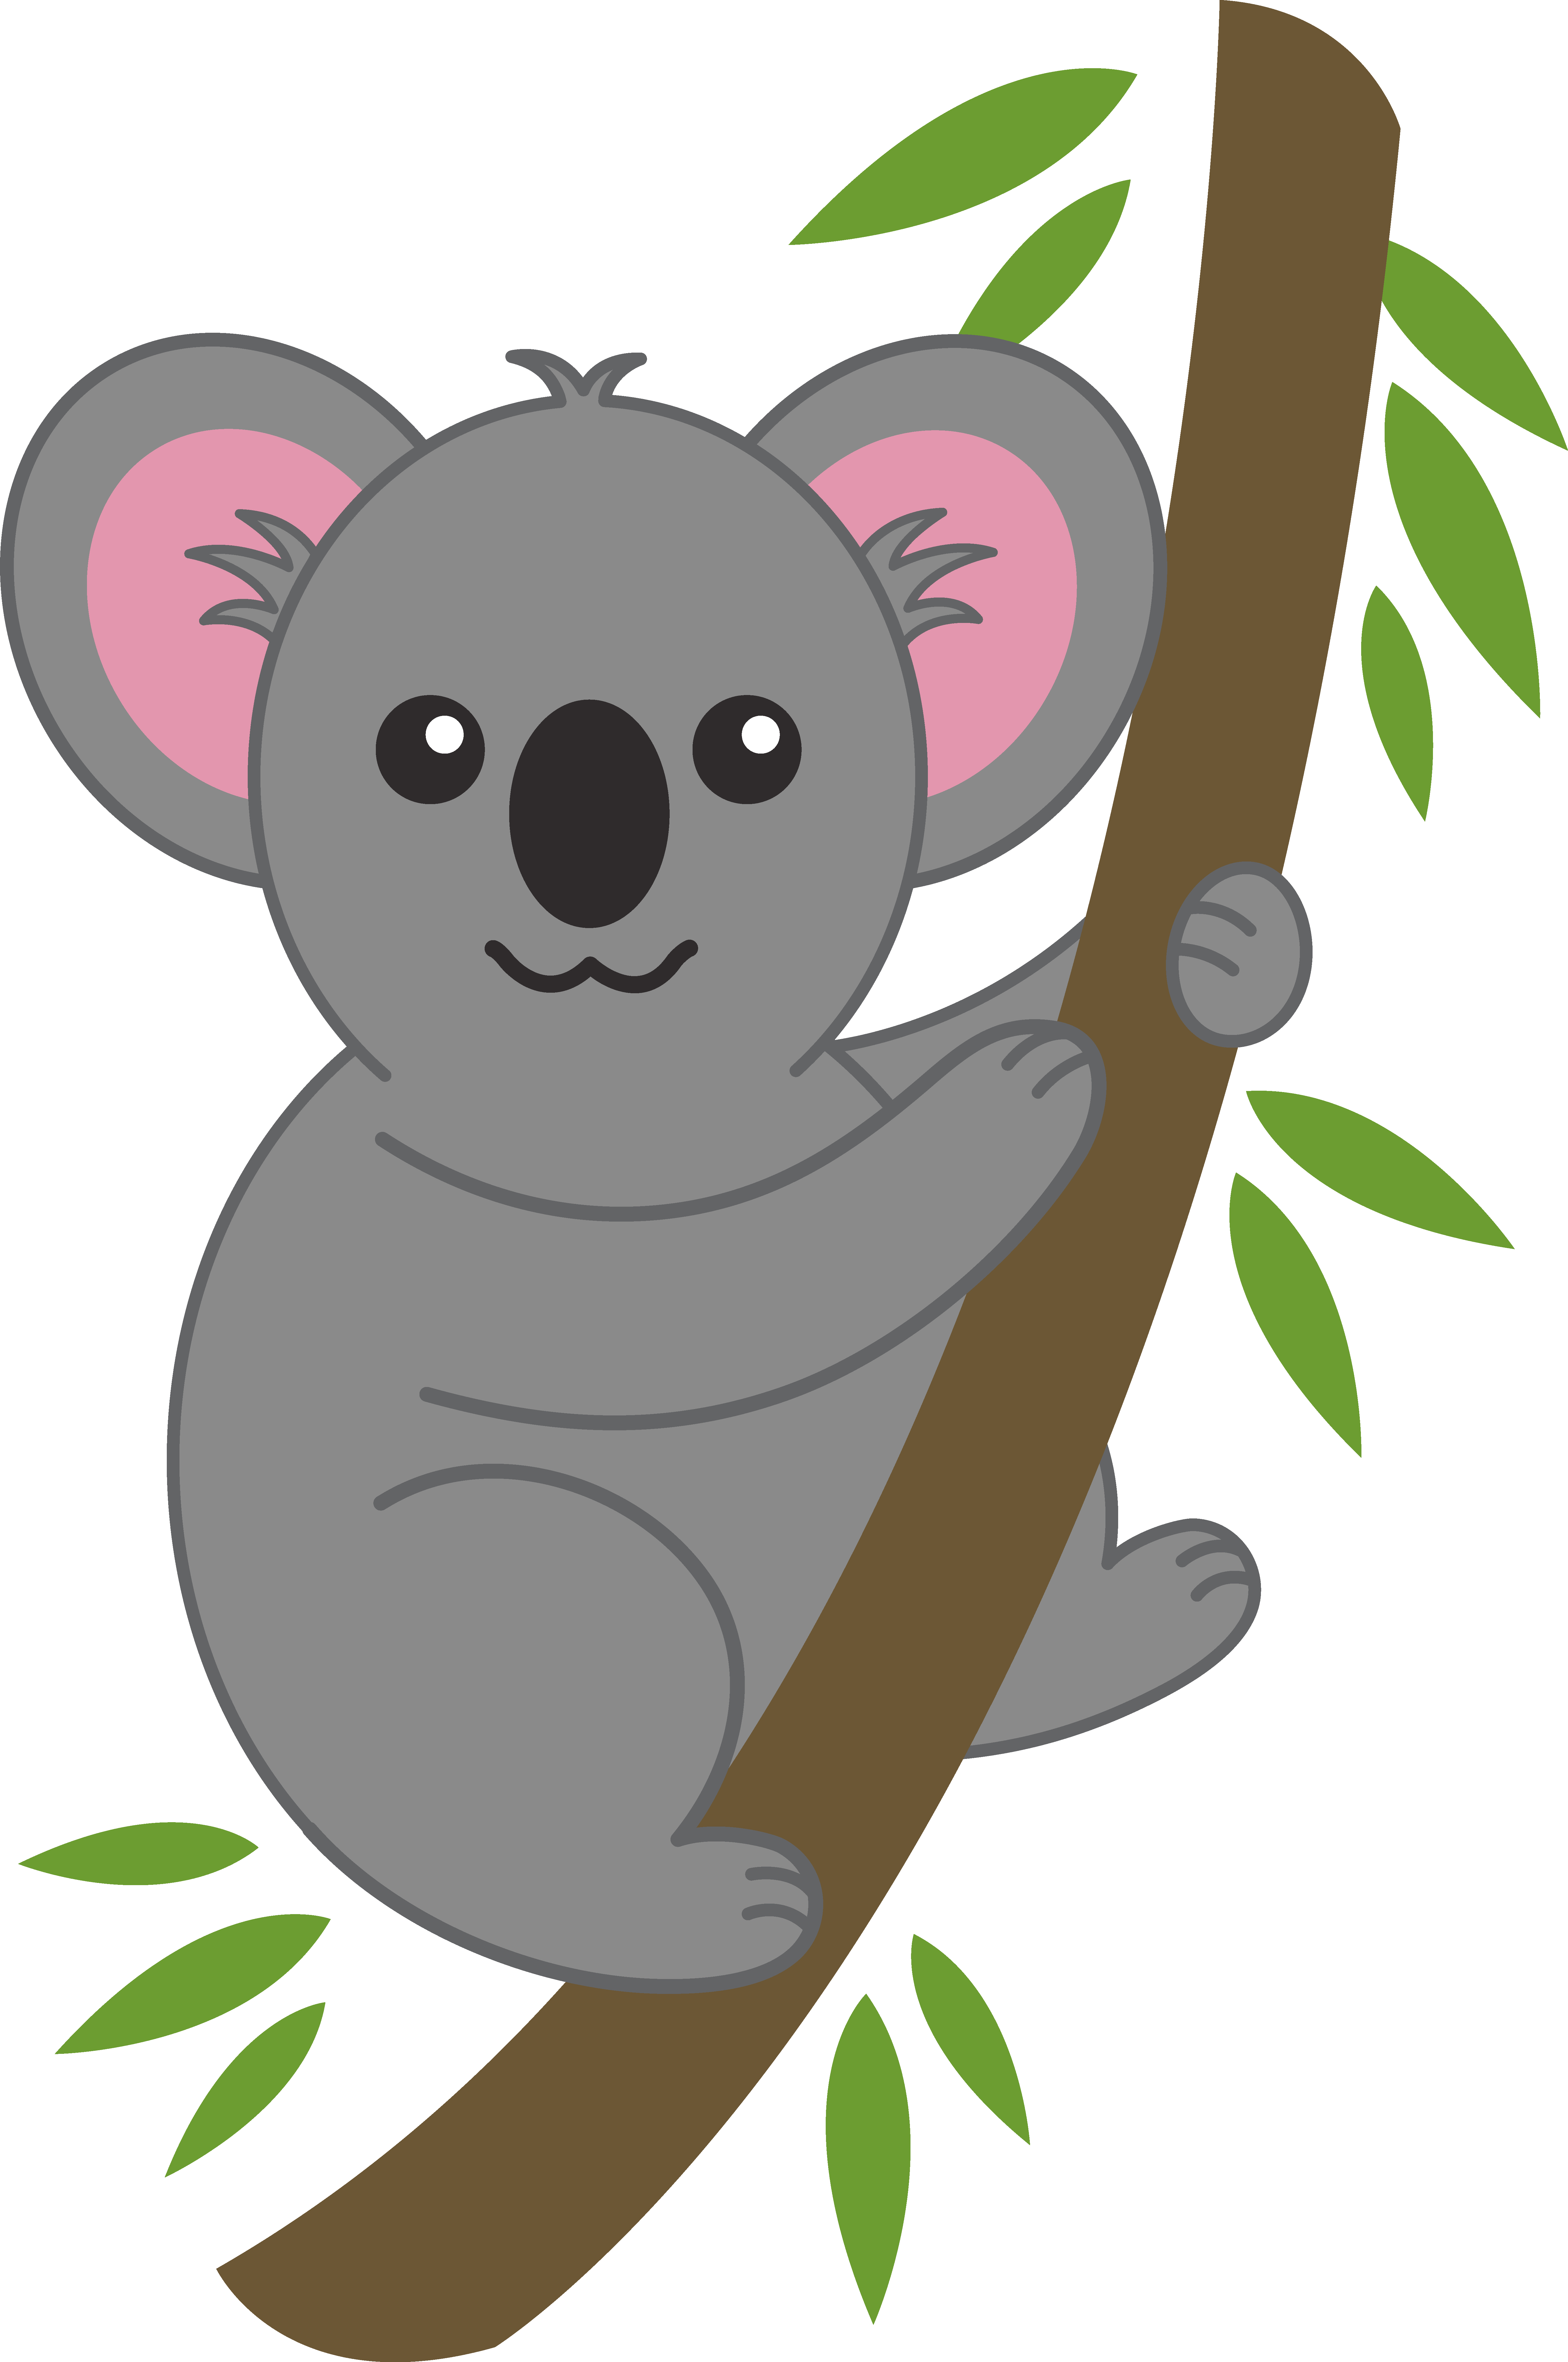 koala bear clip art | Cute Koala on Tree Branch - Free Clip Art | Nursery baby #3 | Pinterest | Trees, The arts and Koalas